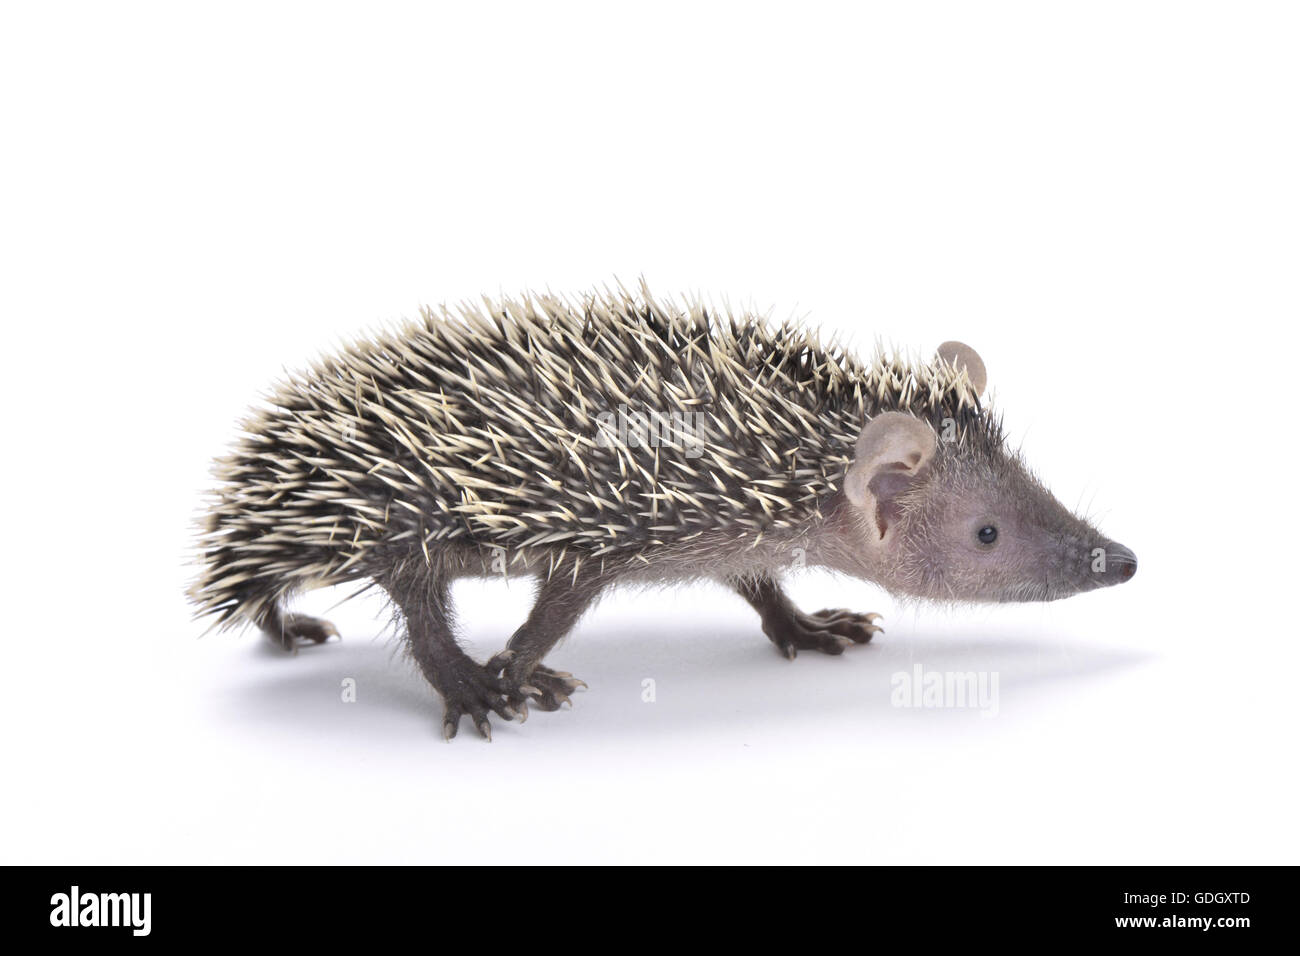 Minore tenrec hedgehog (Echinops telfairi) Foto Stock